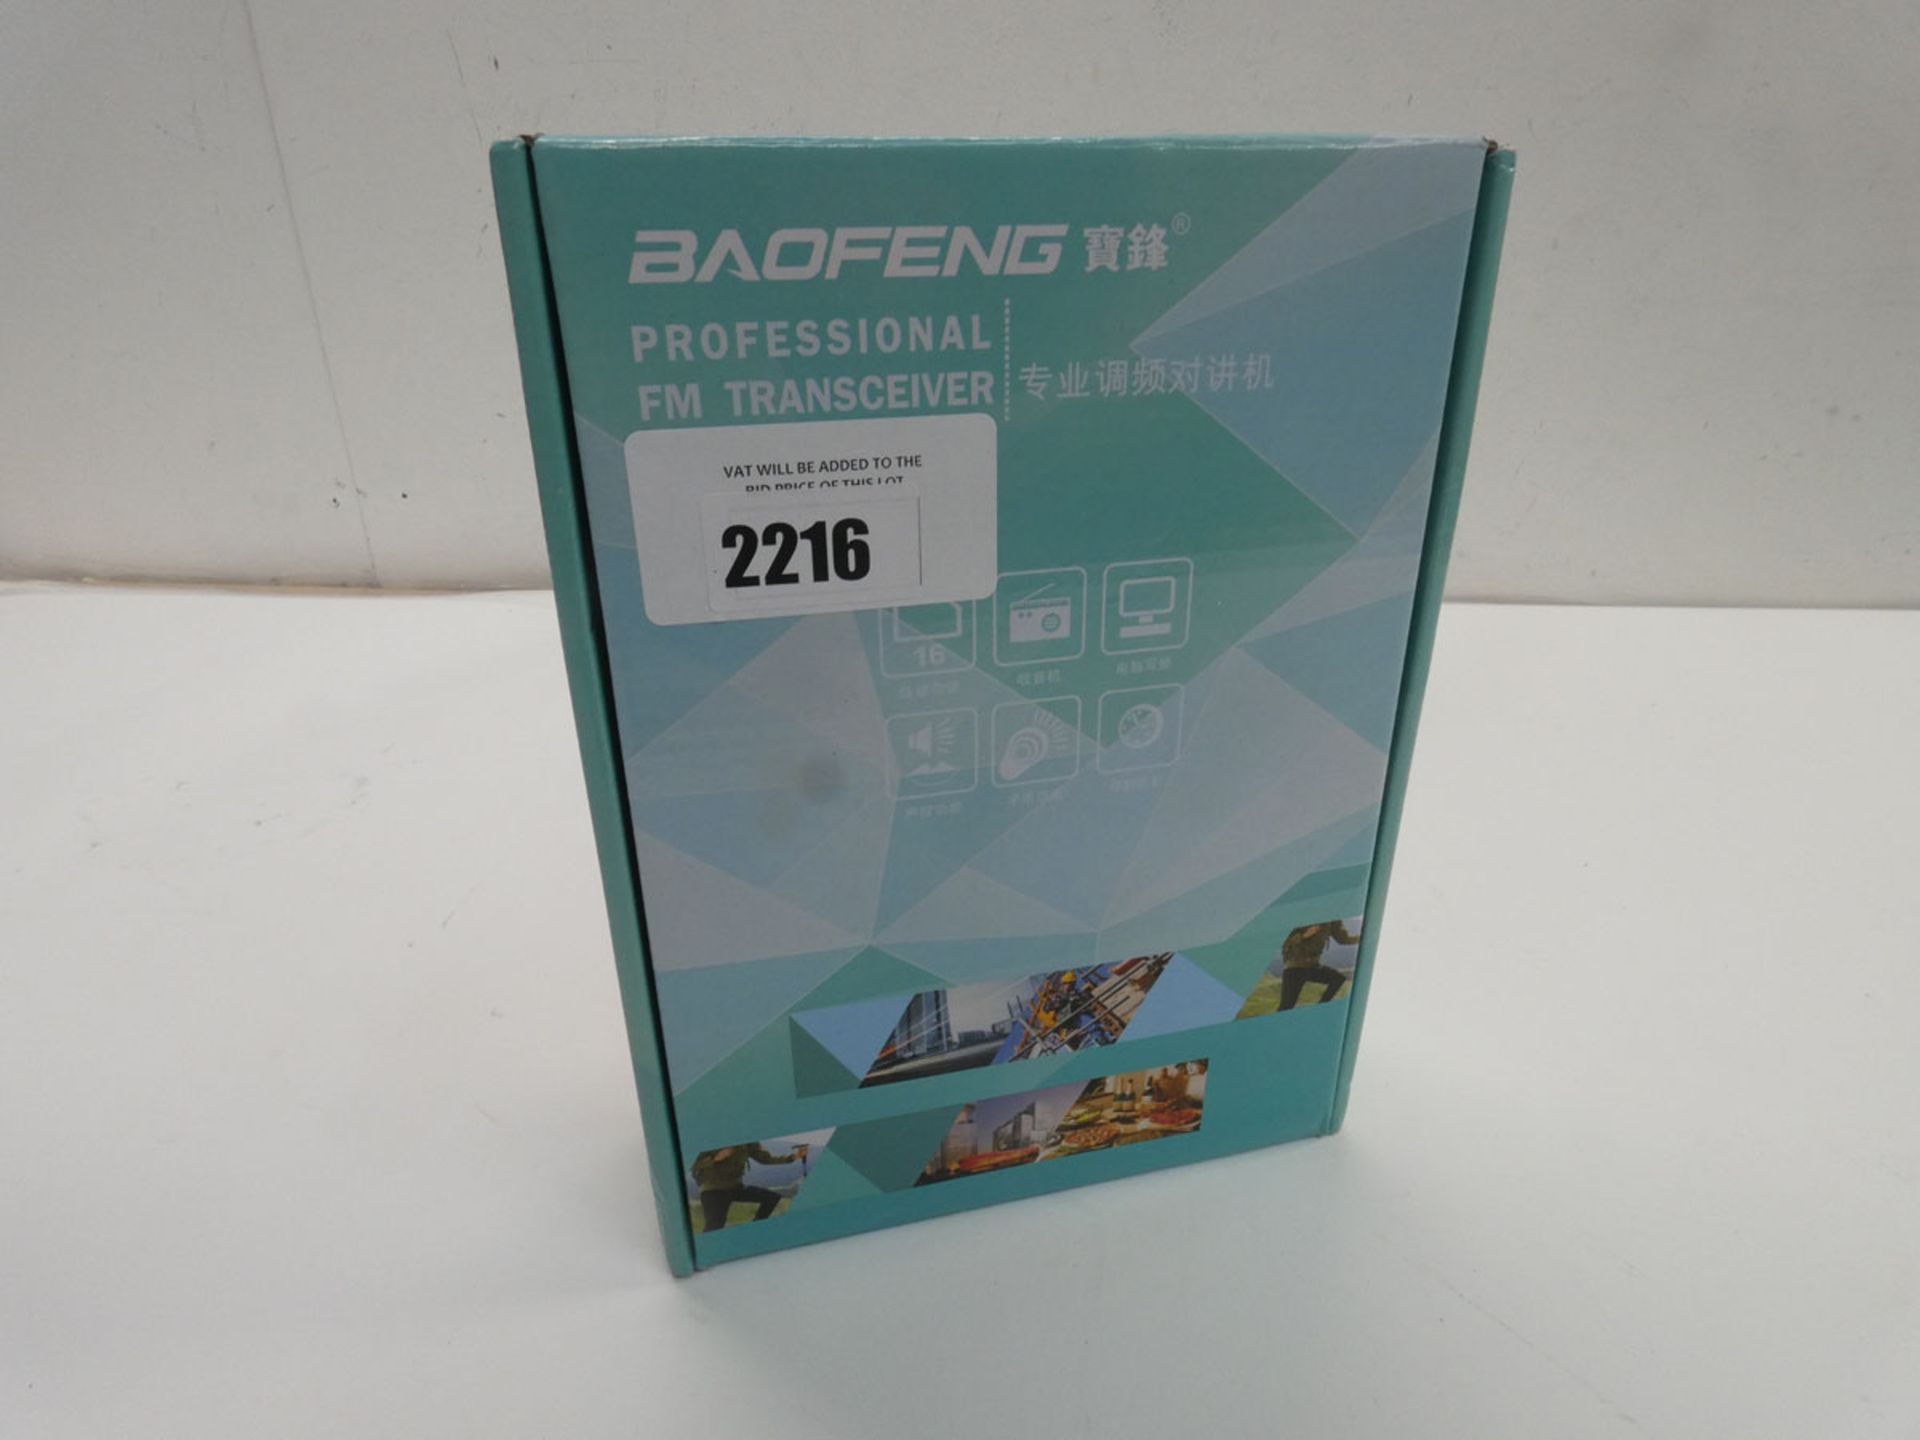 Baofeng Professional FM transceiver